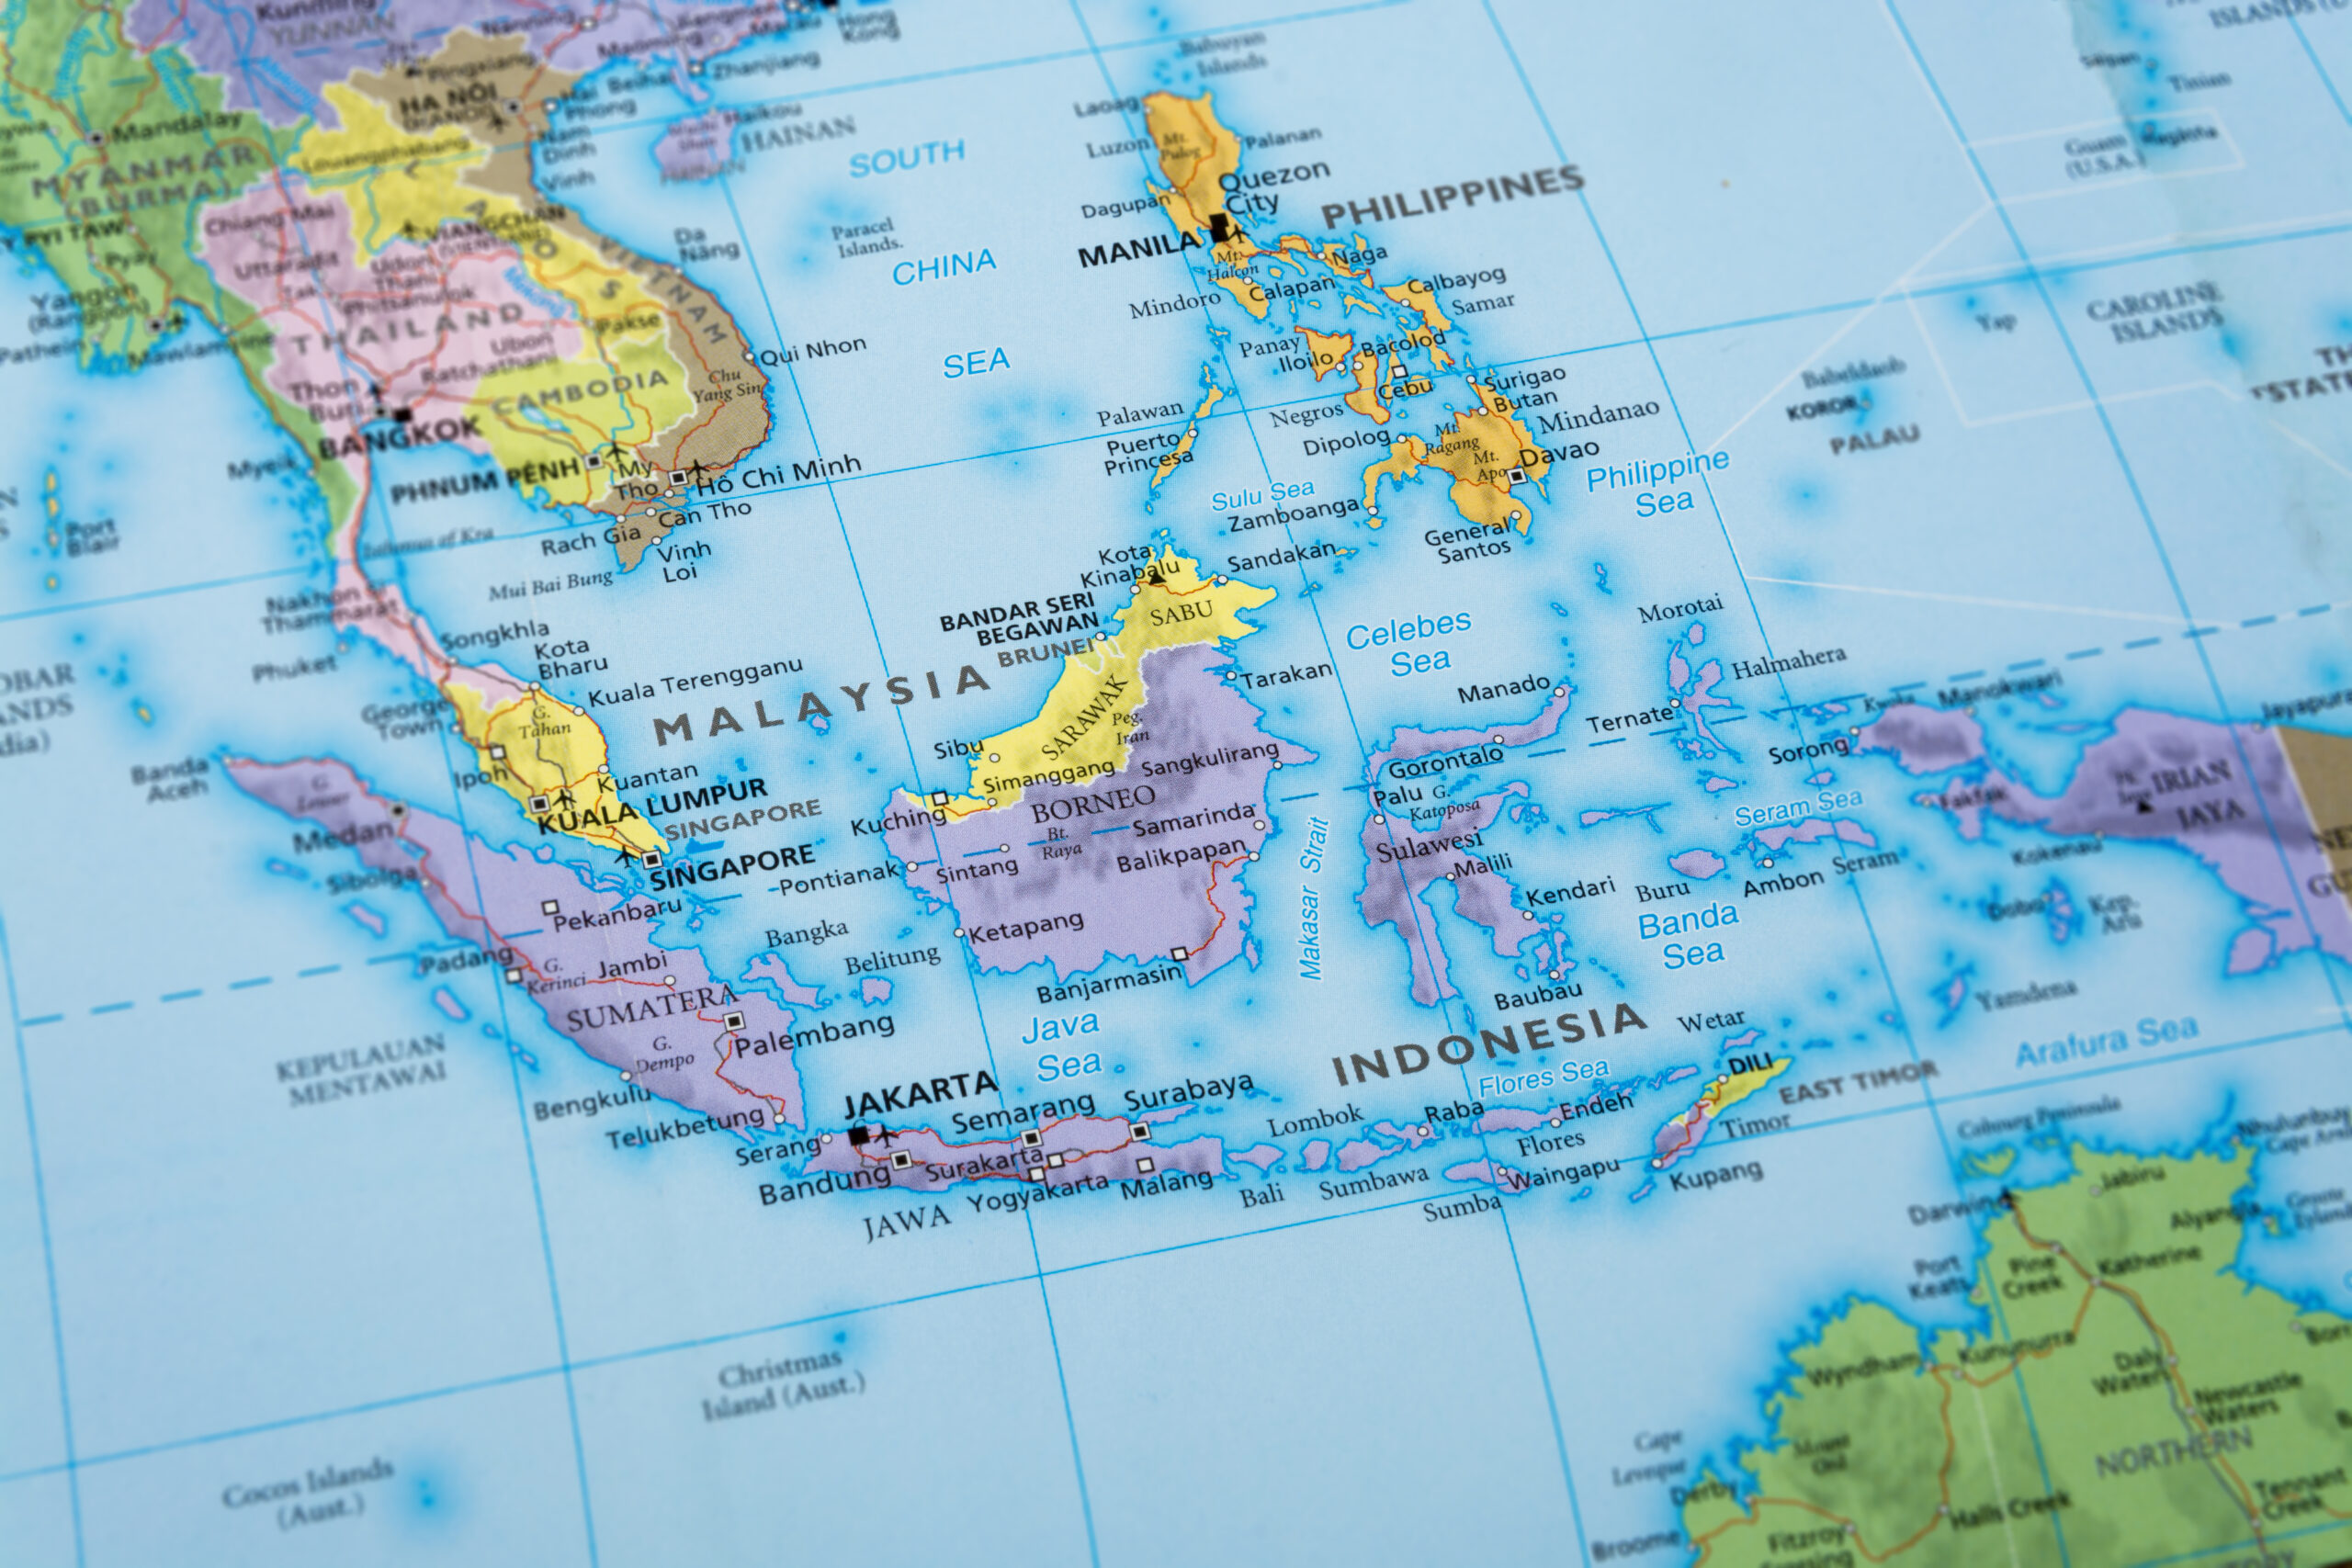 Why Washington’s eyes are focusing on Southeast Asia